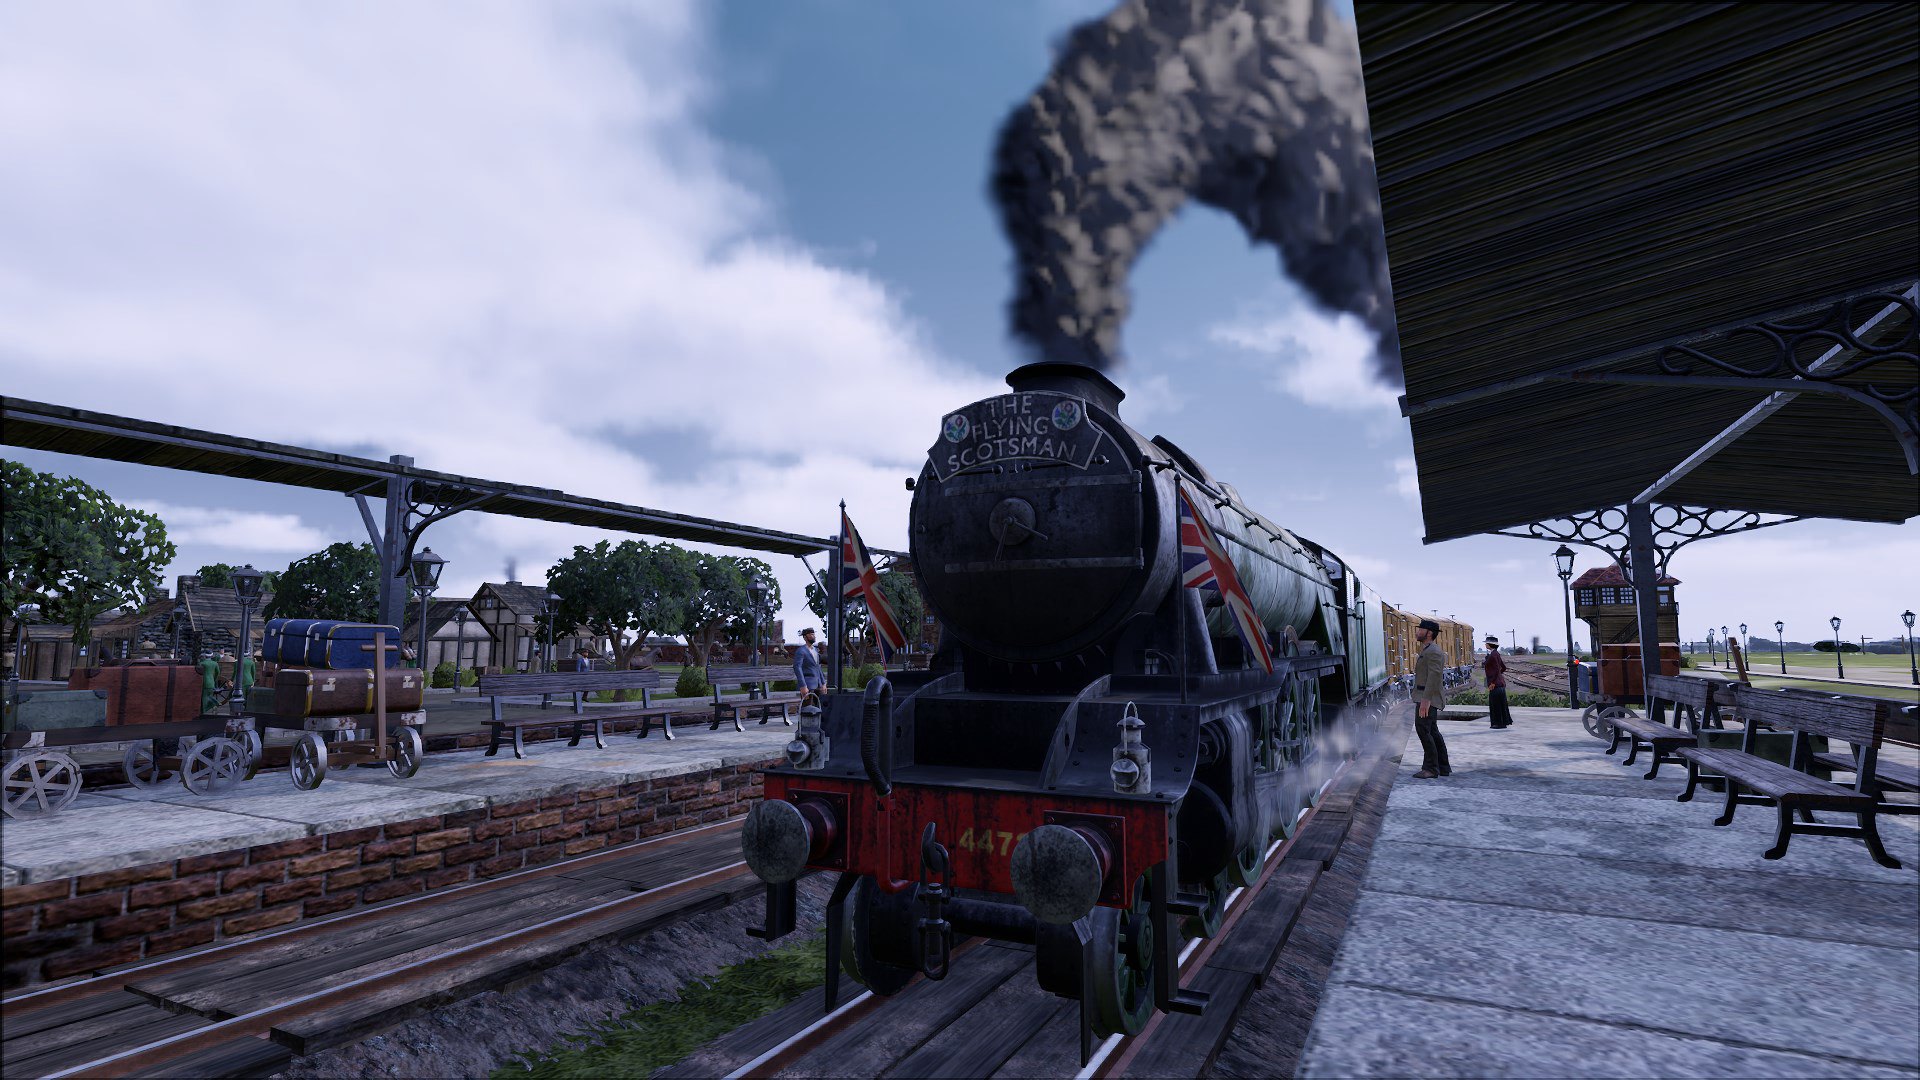 Railway Empire - Great Britain & Ireland DLC Steam CD Key